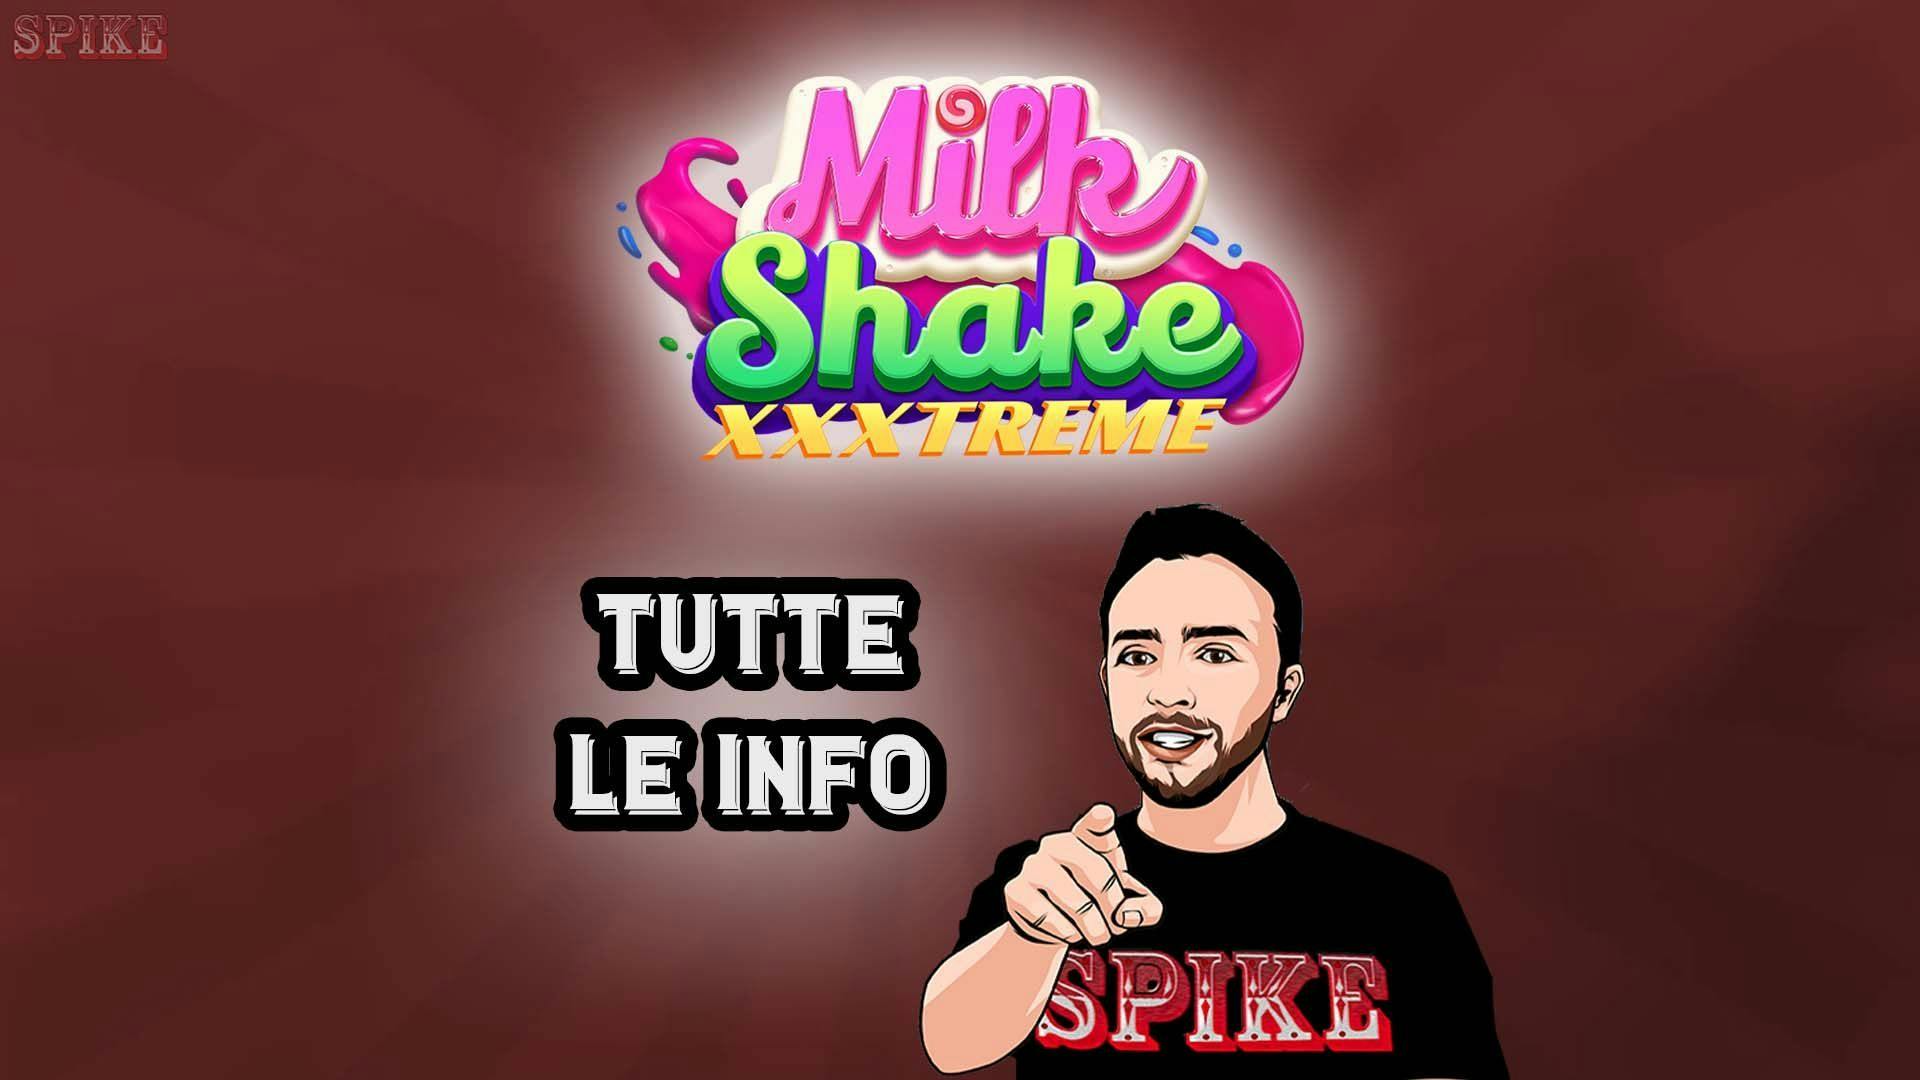 Milkshake XXXtreme Slot